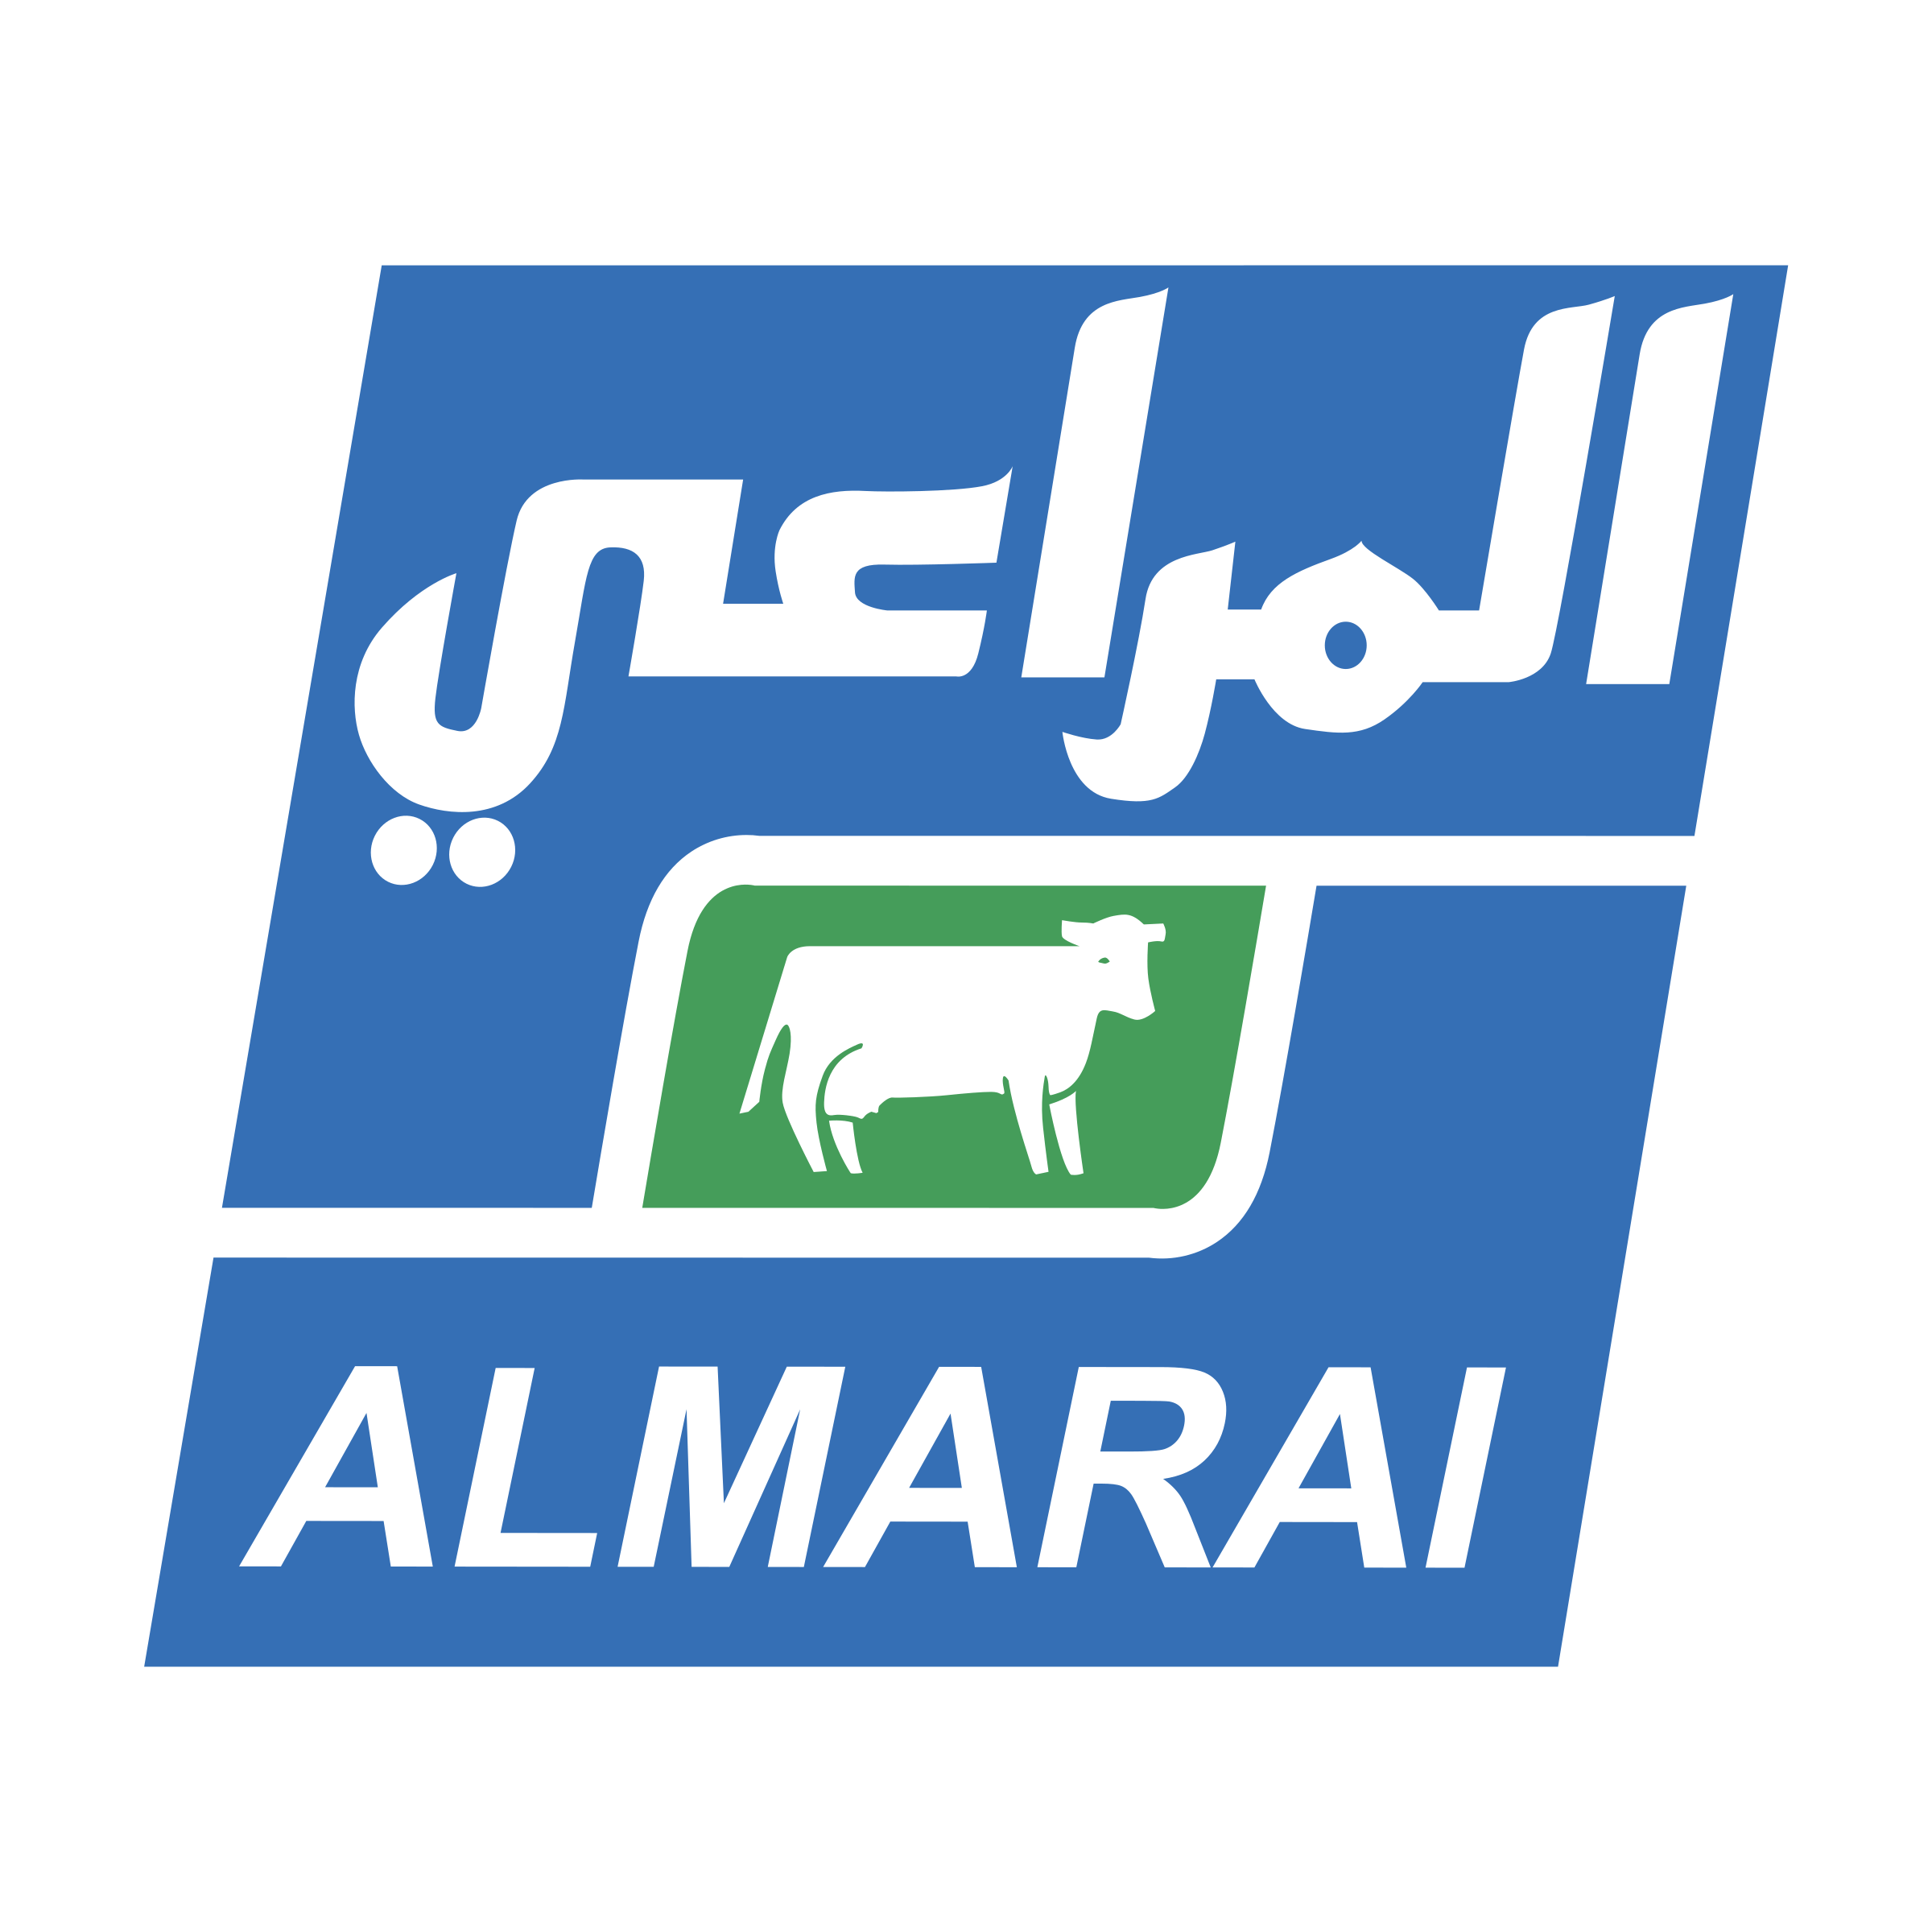 Almarai Logo - Almarai Logo PNG Transparent & SVG Vector - Freebie Supply